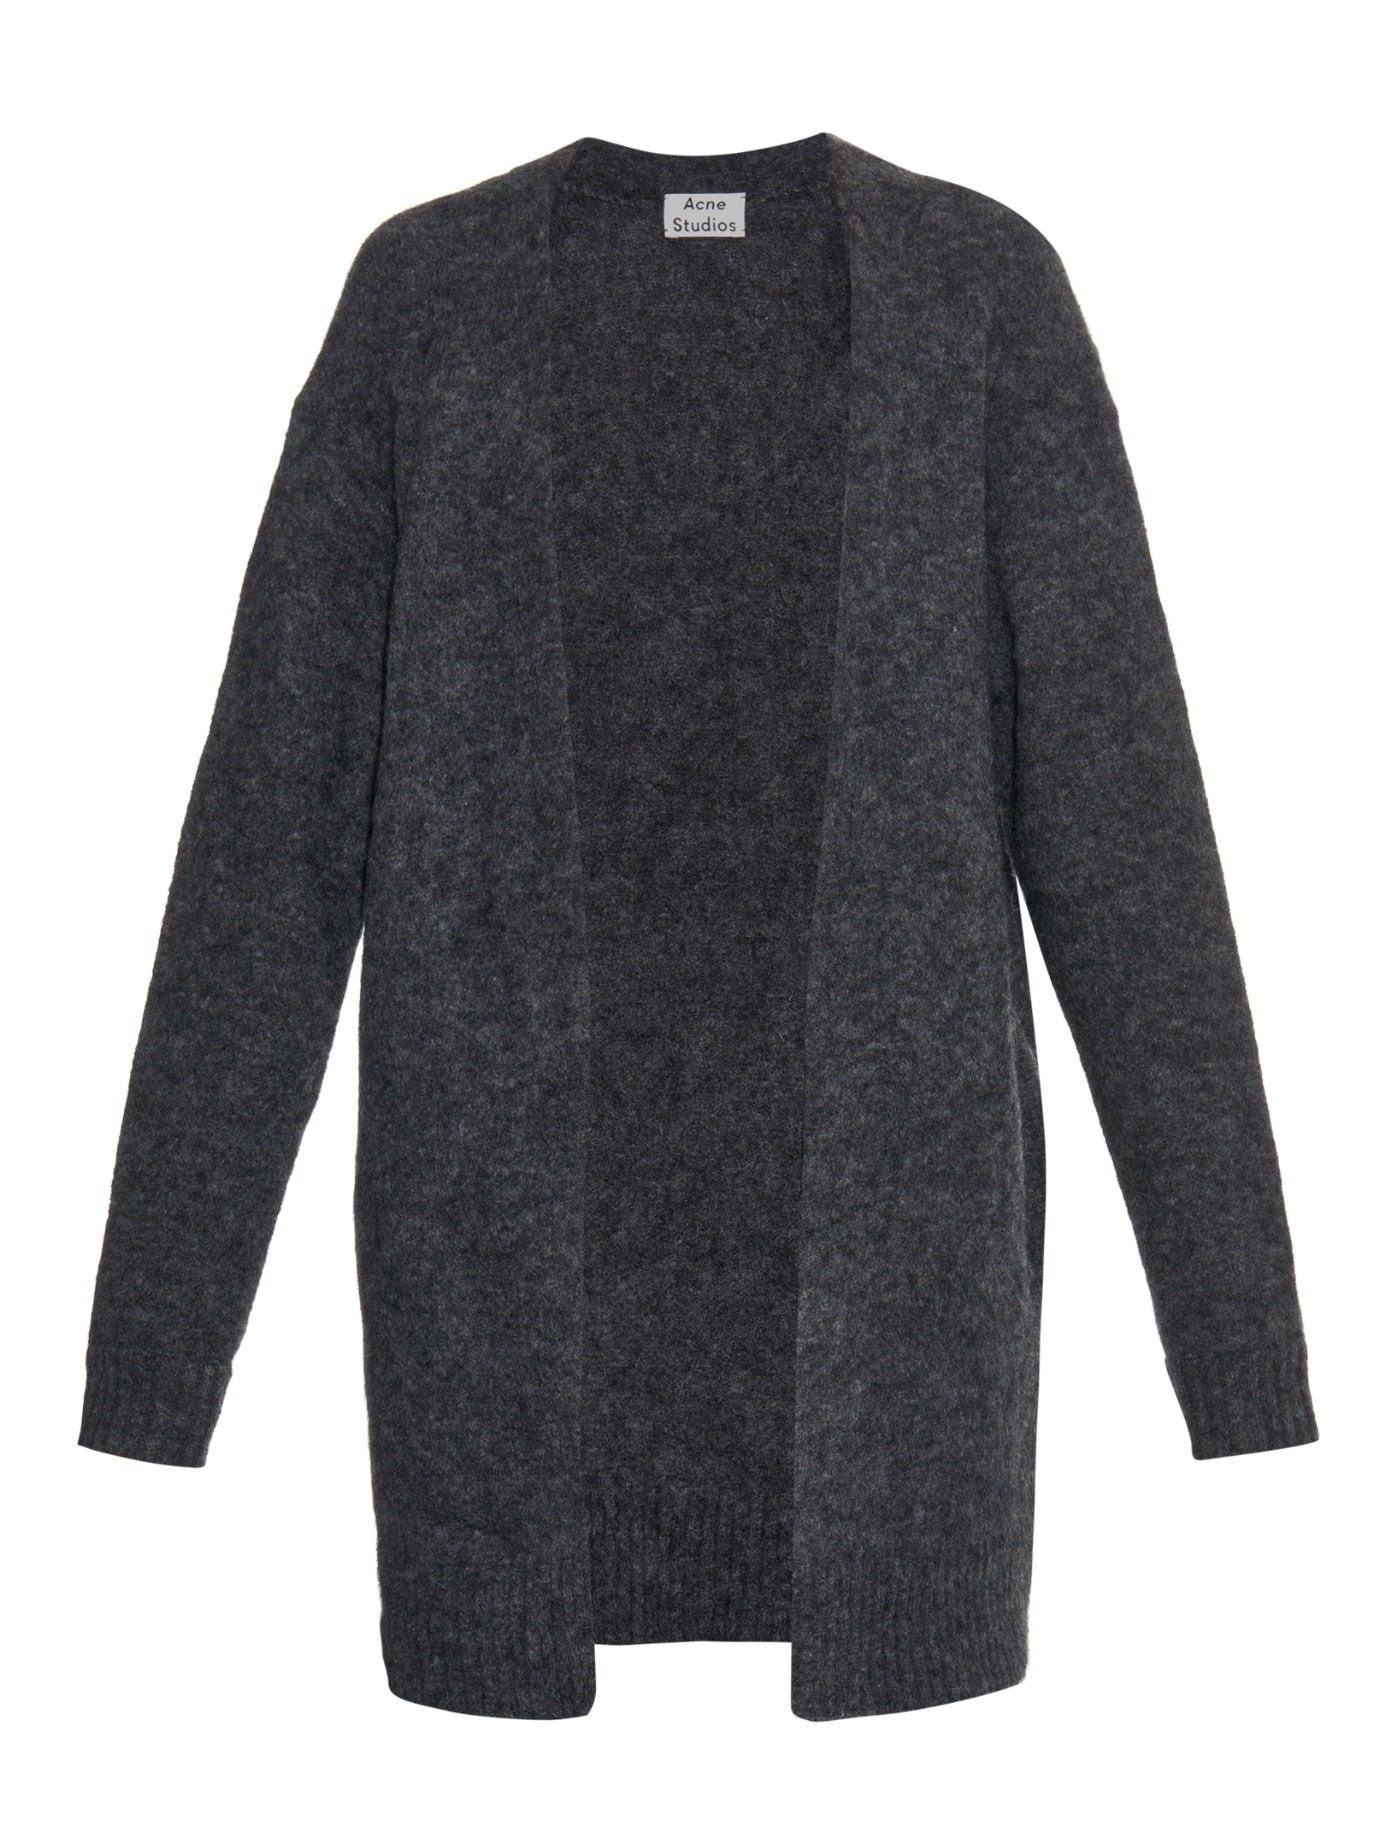 Online dark gray cardigan sweater shirts women helsinki